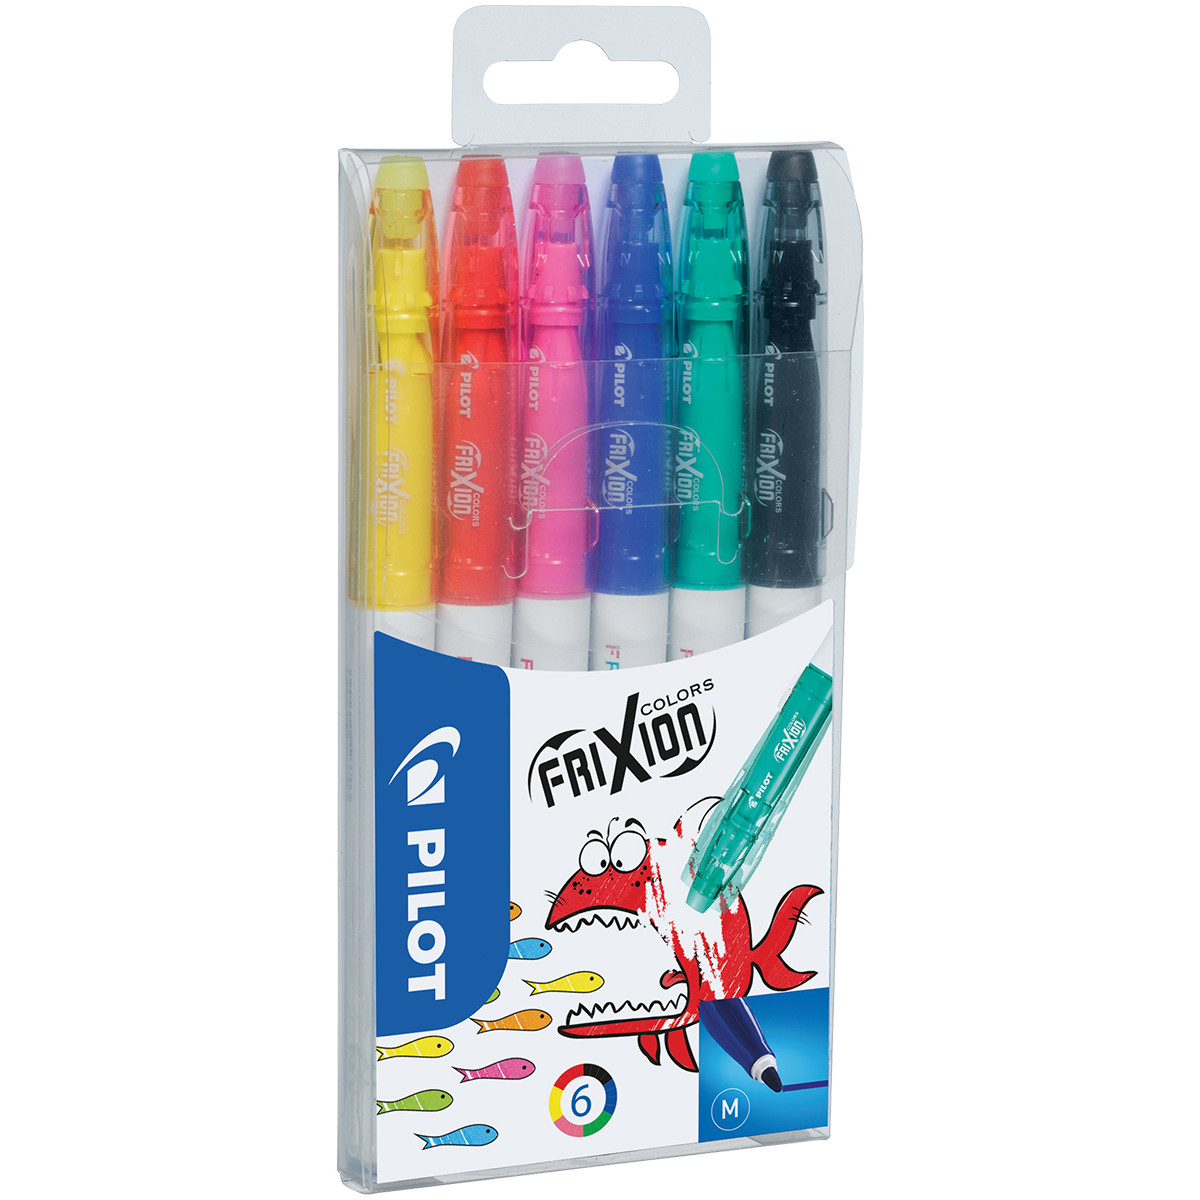 Pilot FriXion Colors Erasable Fibre Tip Pen - Assorted (Pack of 6)